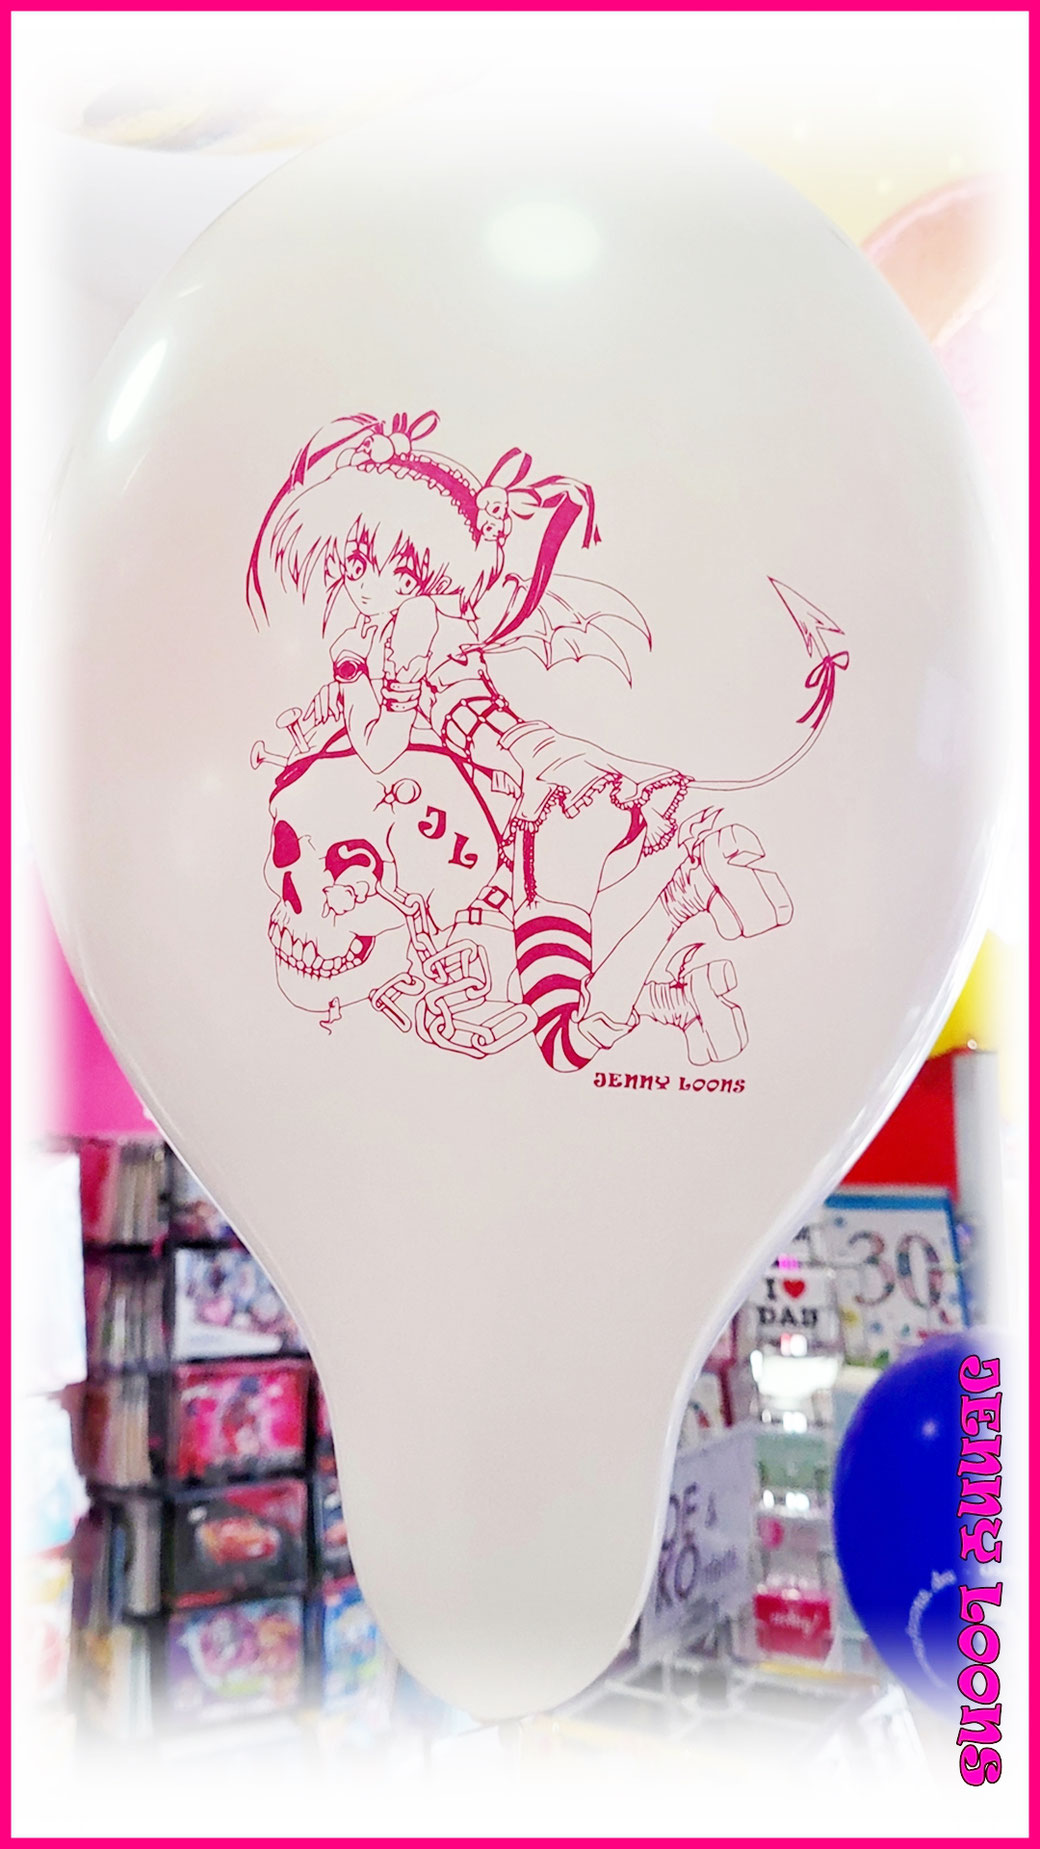 BELBAL B120 DEMON GIRL JENNY LOONS JENNYLOONS Manga Anime - Luftballons - Ballons - Balloons